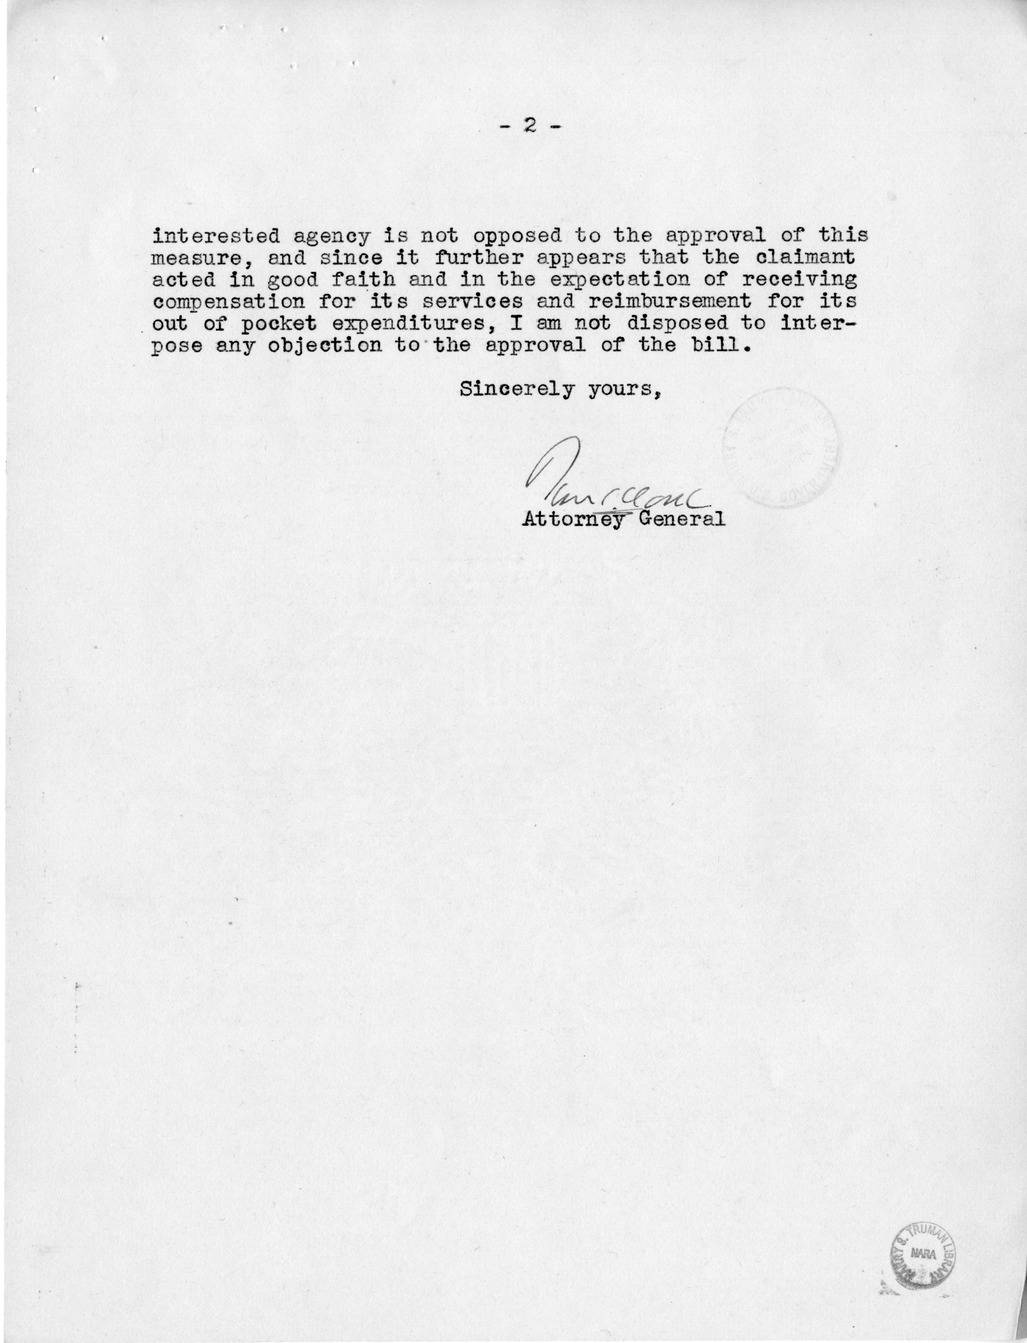 Memorandum from Paul H. Appleby to M. C. Latta, S. 562, For the Relief of Klau-Van Pietersom-Dunlap Associates, Incorporated, with Attachments